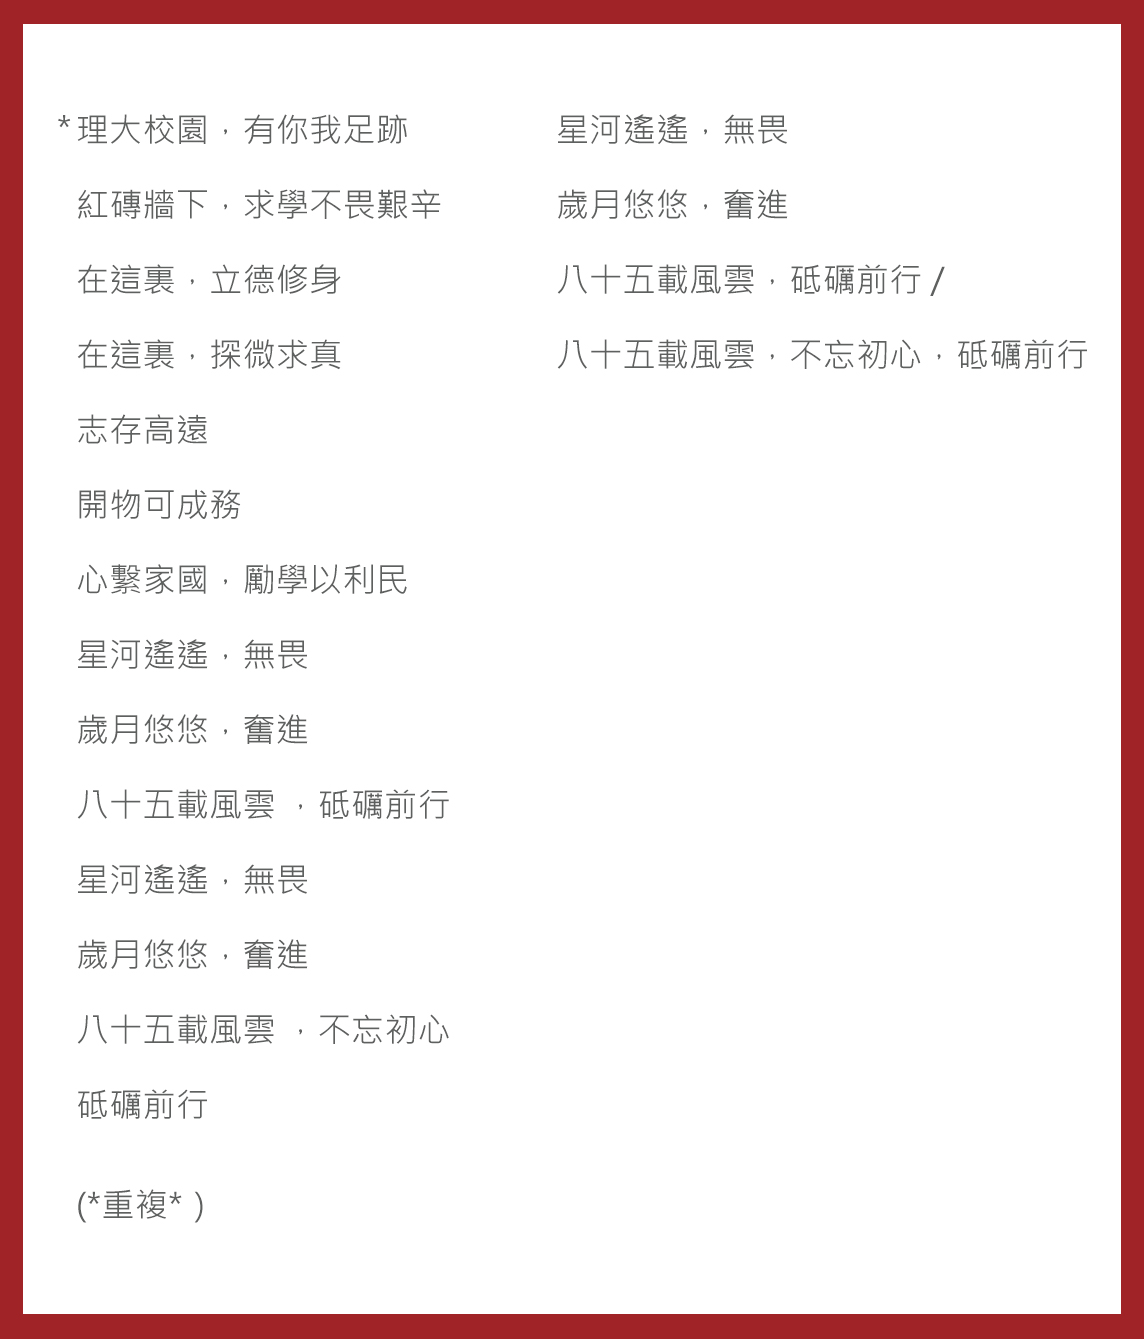 Chinese lyrics